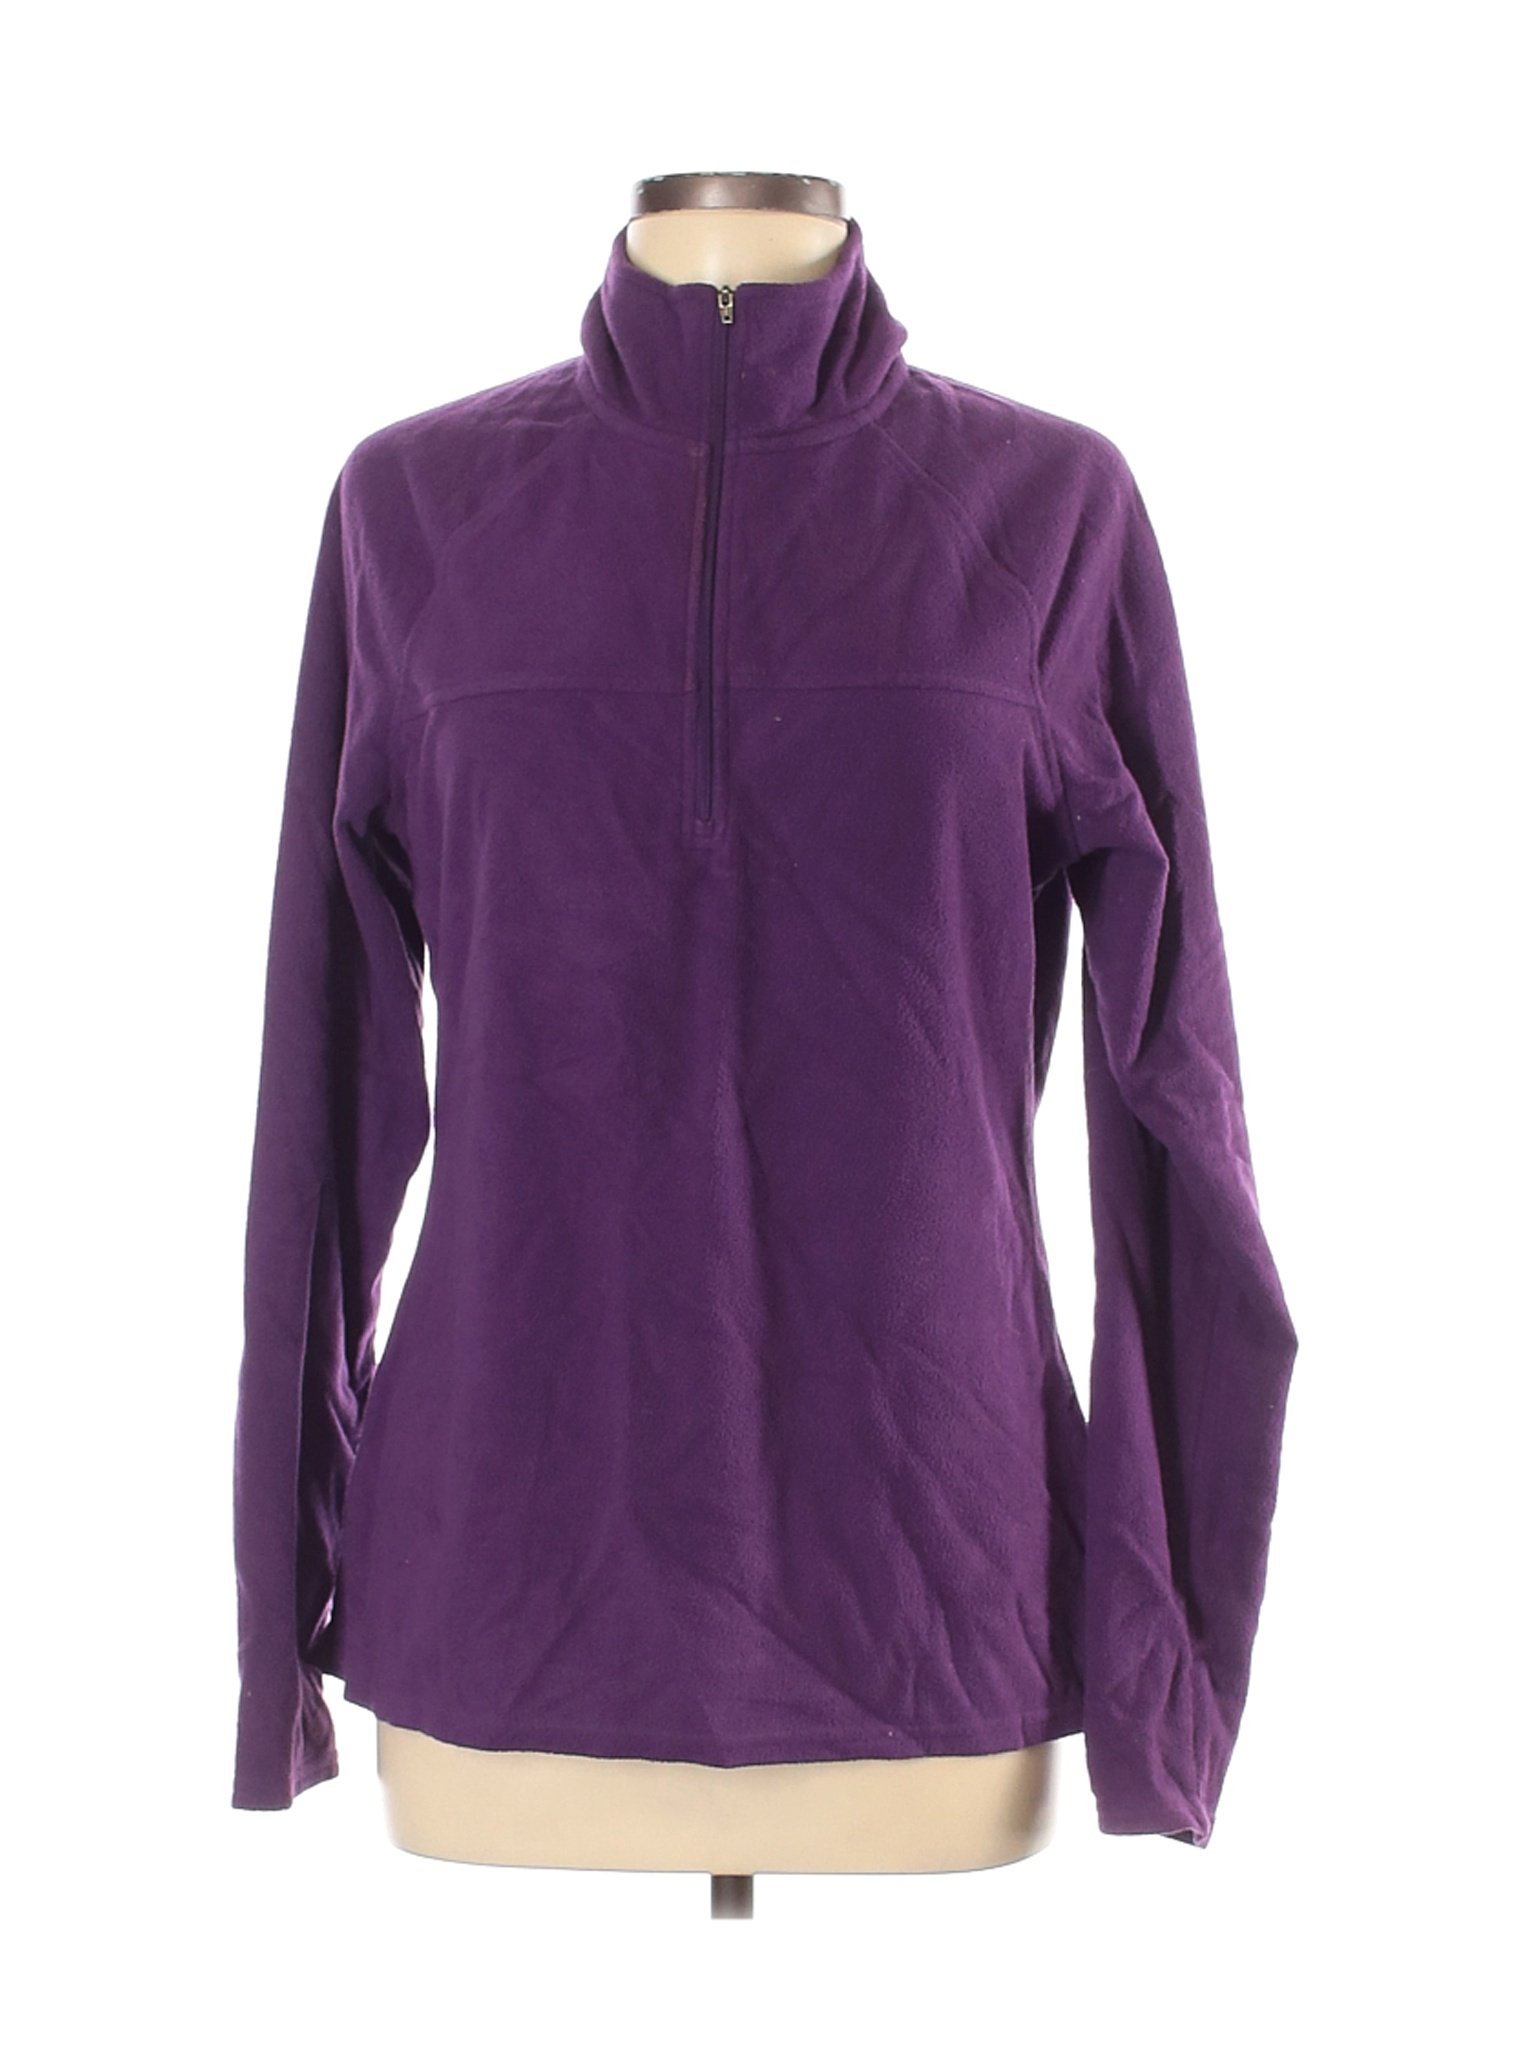 Natural Reflections Women Purple Fleece M | eBay